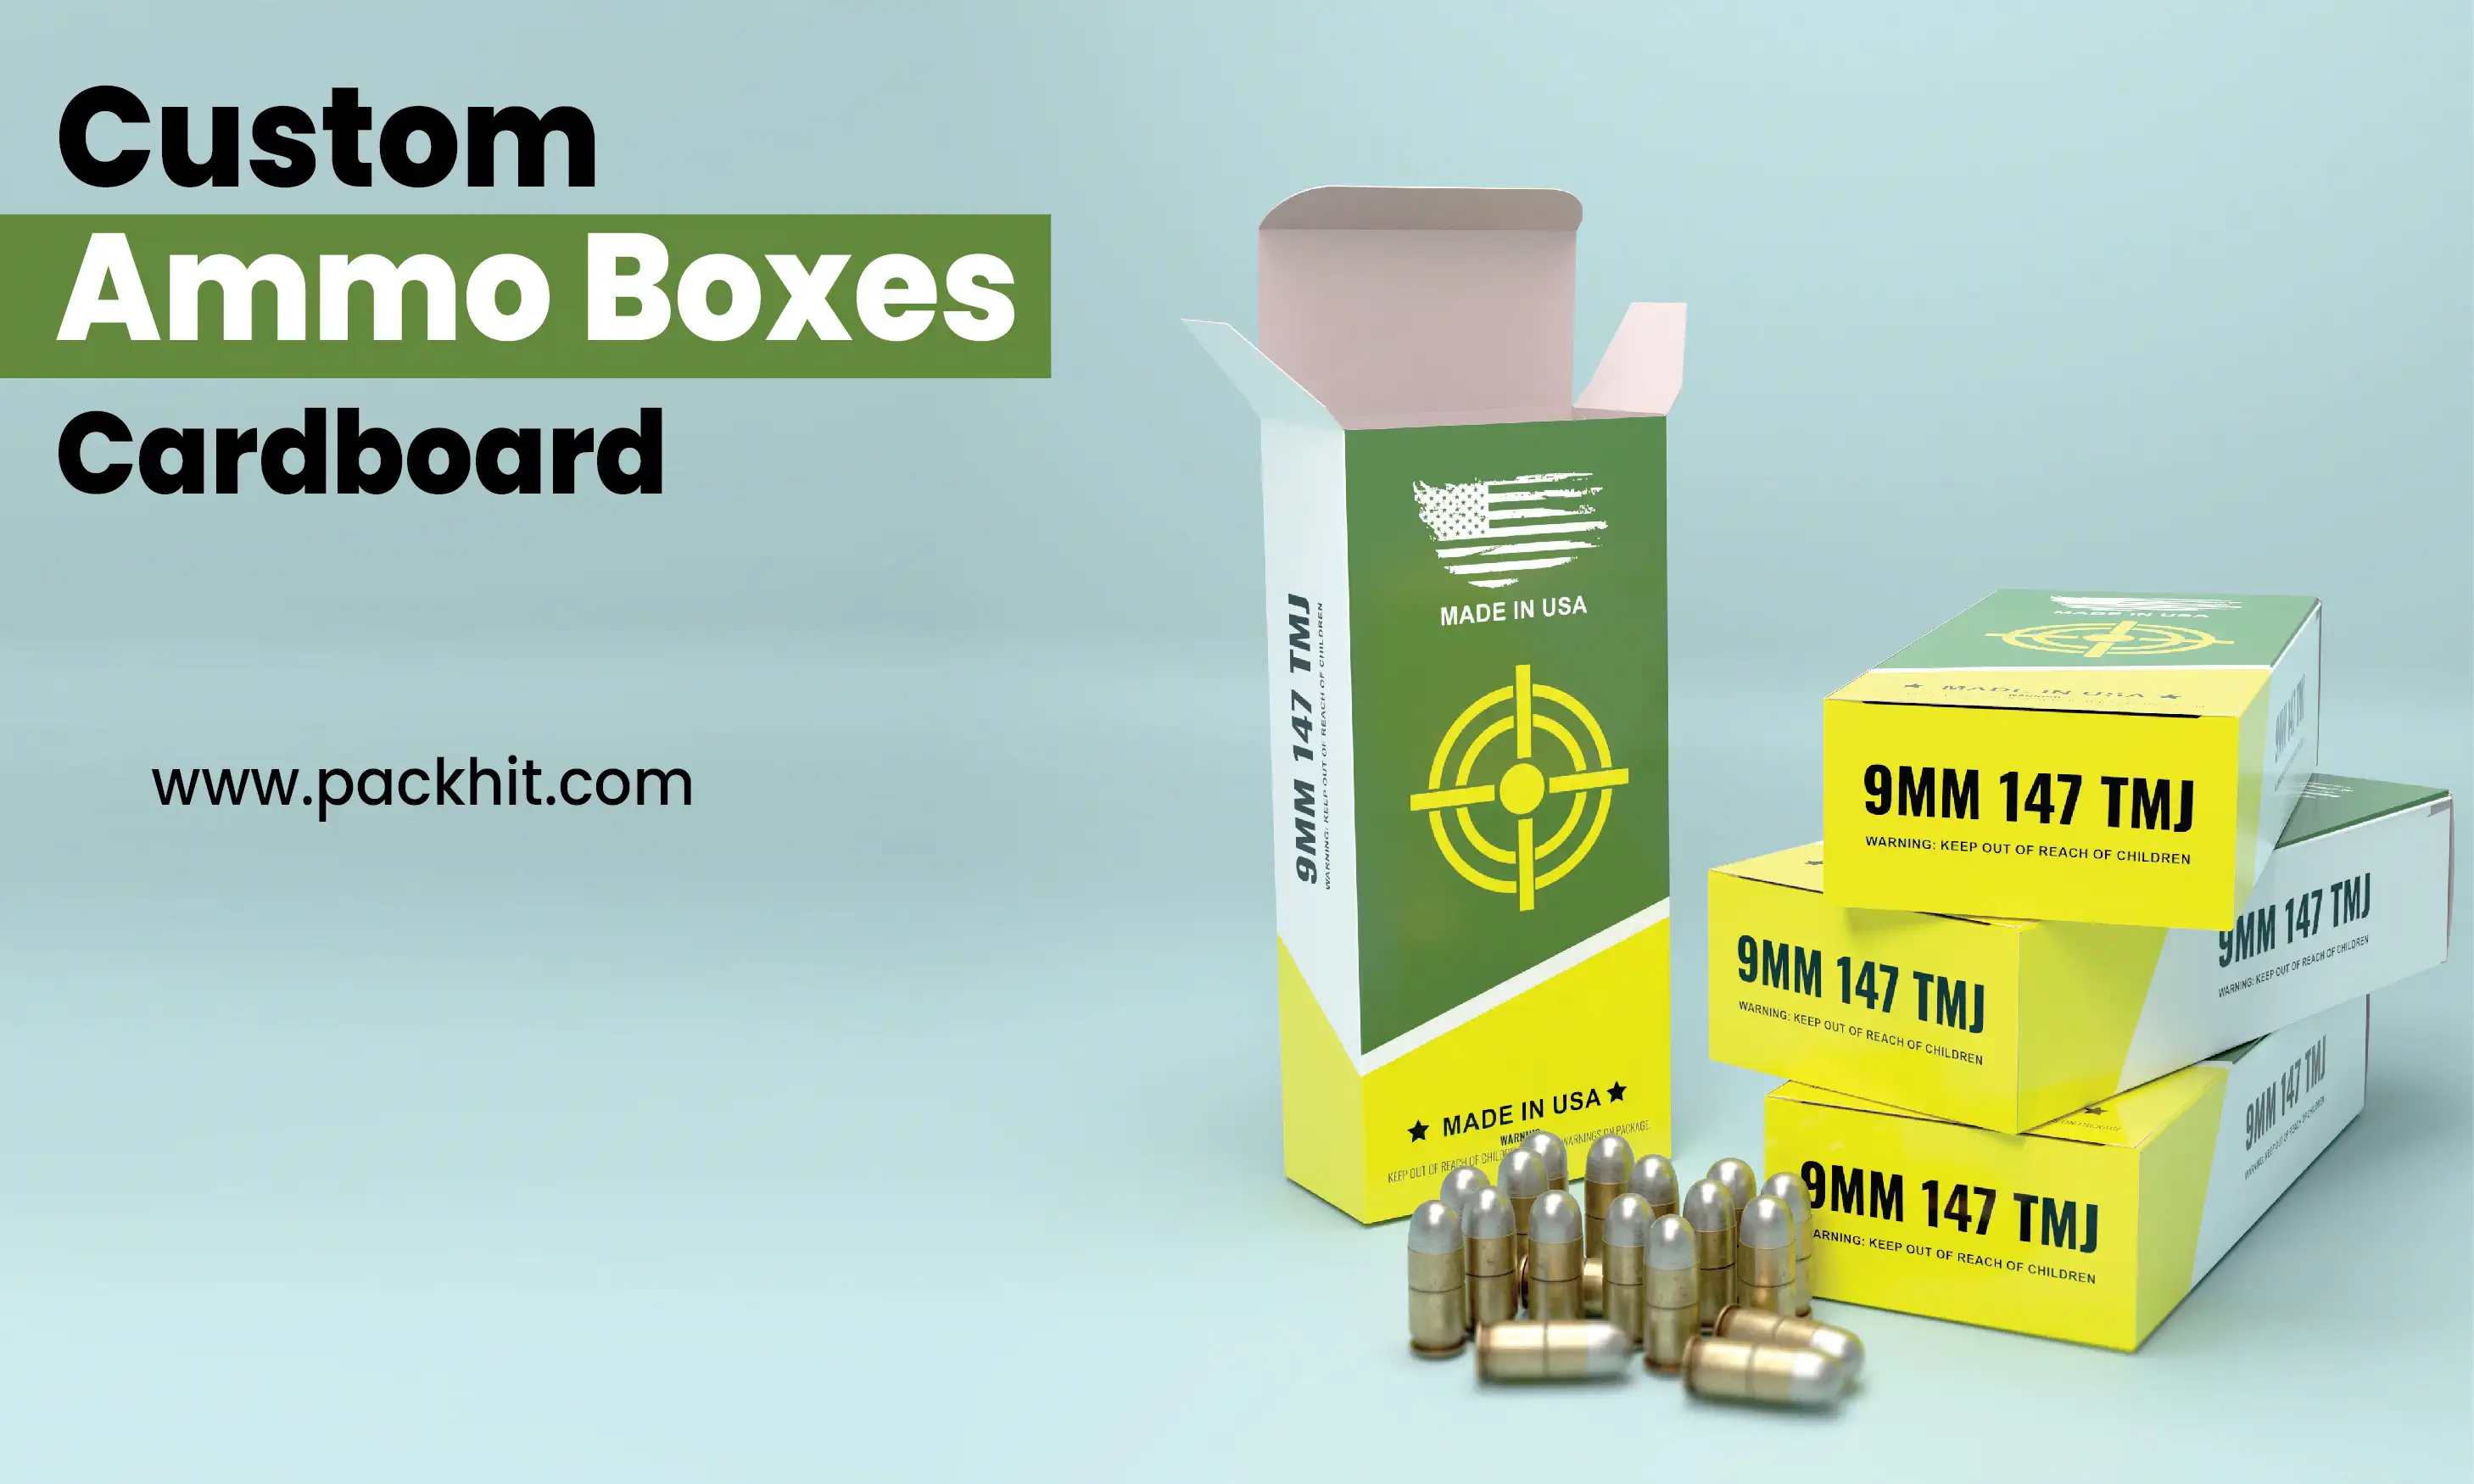 CUstom Printed Ammo Boxes